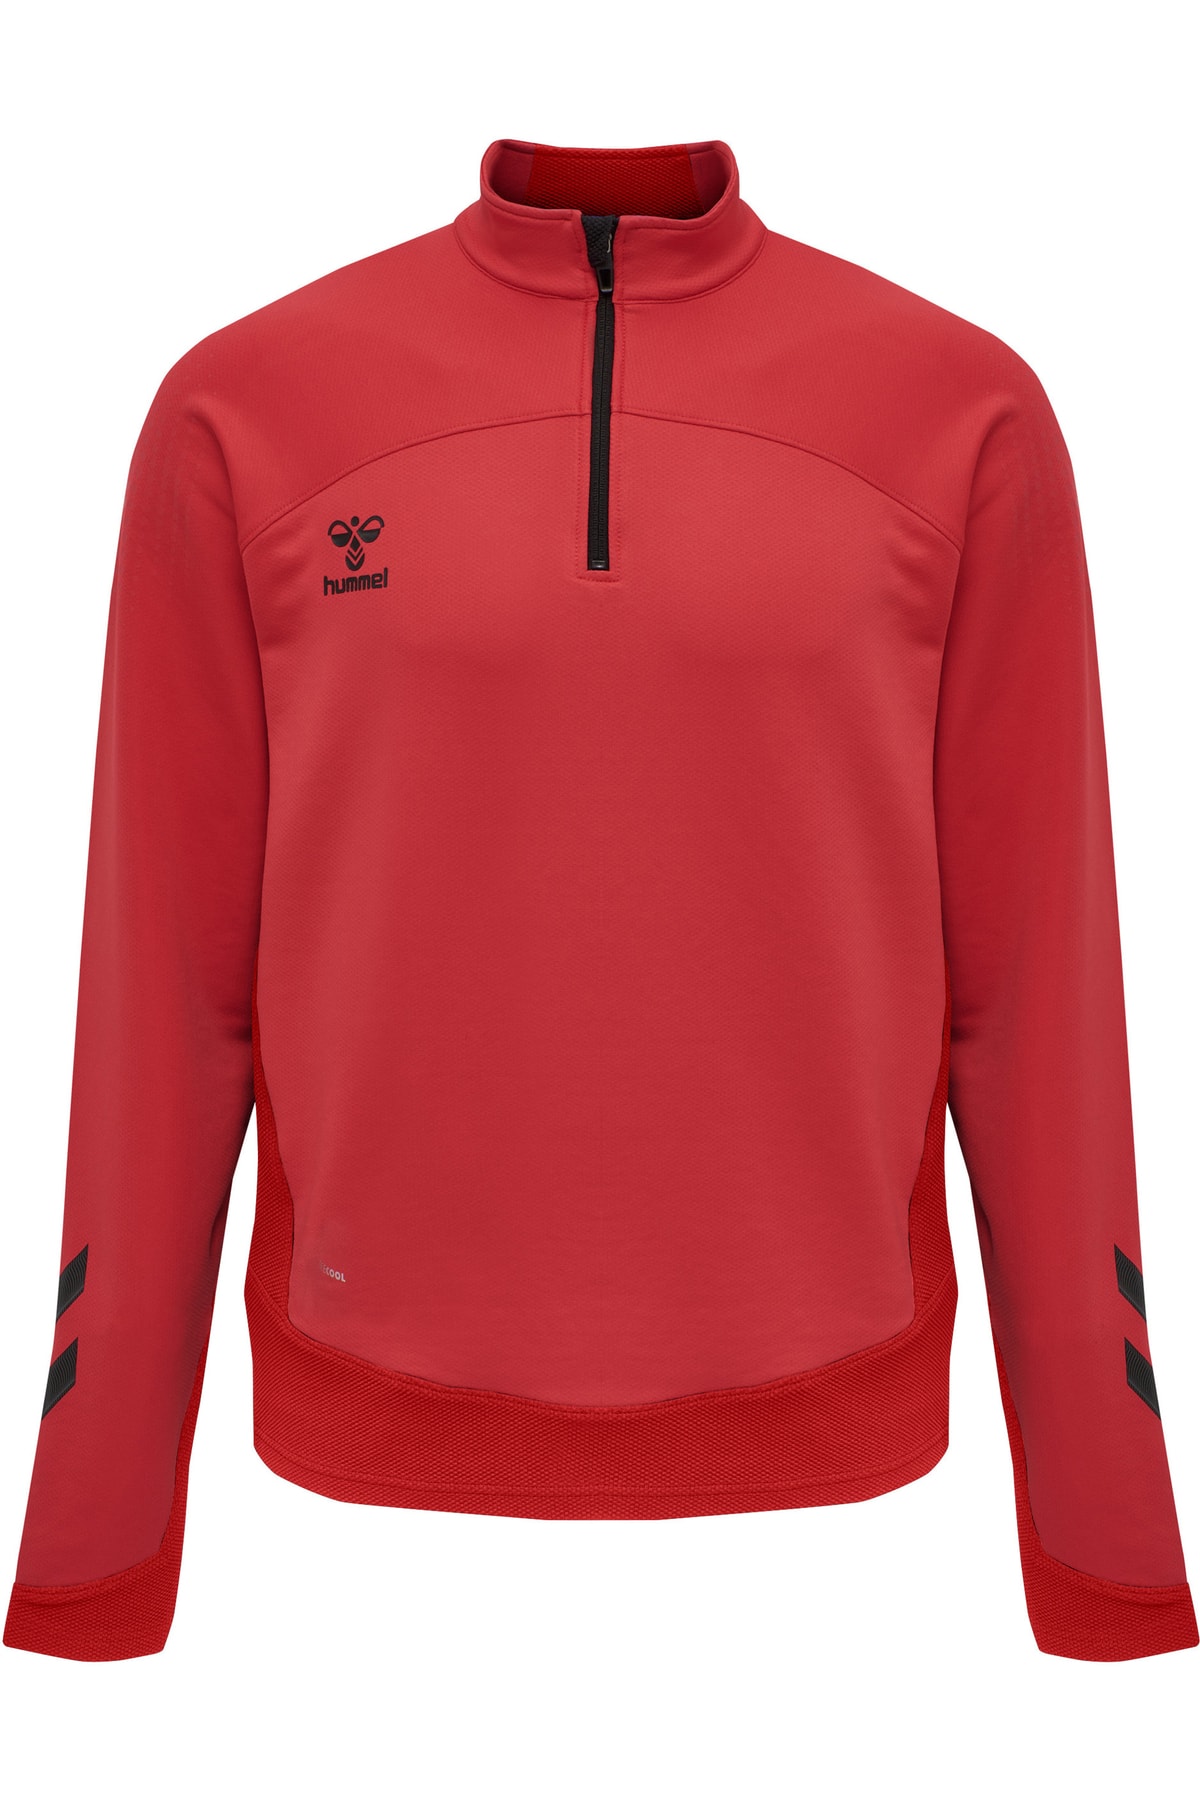 HUMMEL Sweatshirt Rot Regular Fit